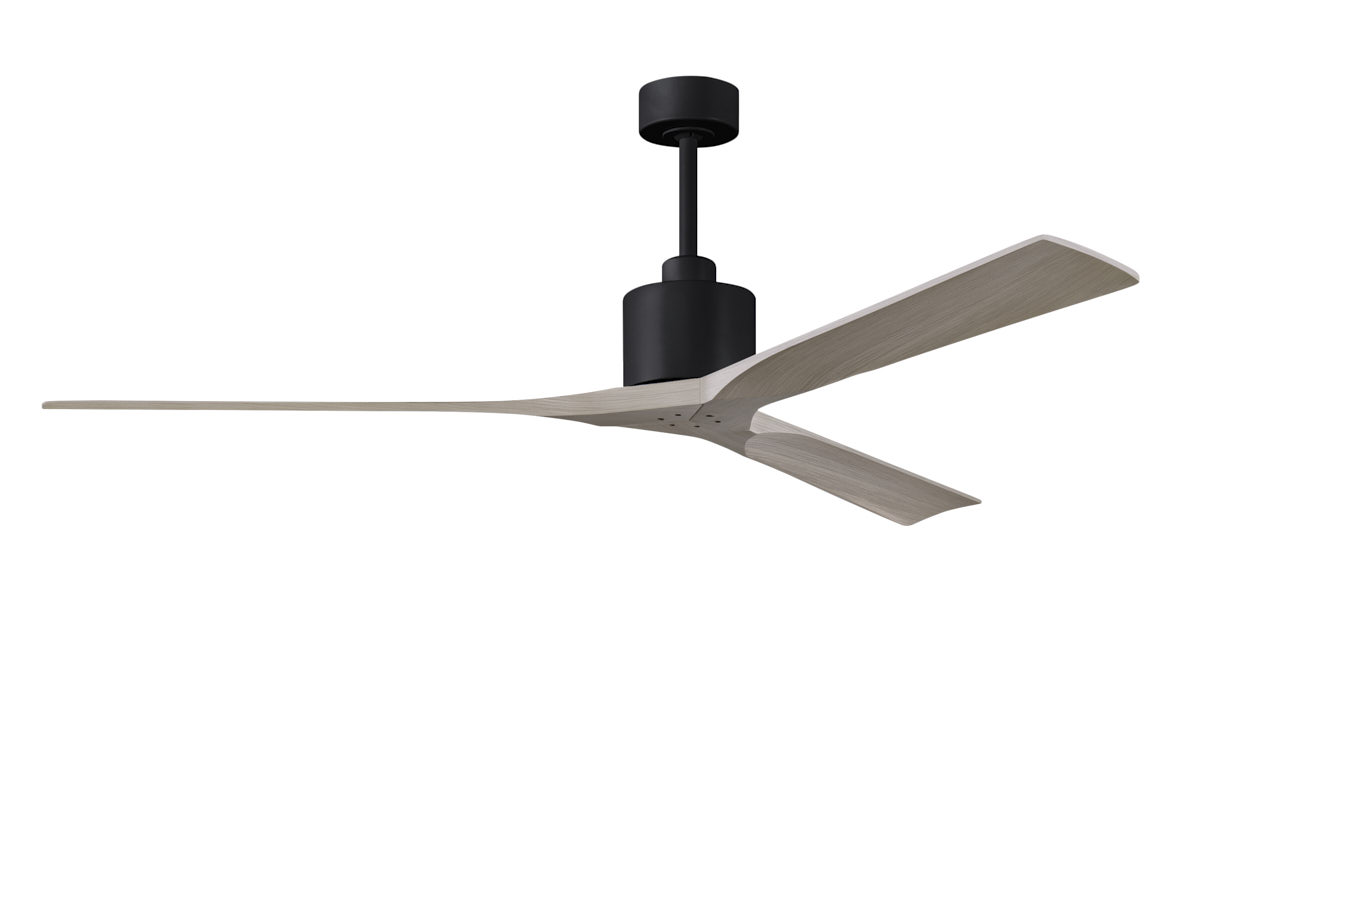 Nan XL ceiling fan in Matte Black with 72” Gray Ash blades